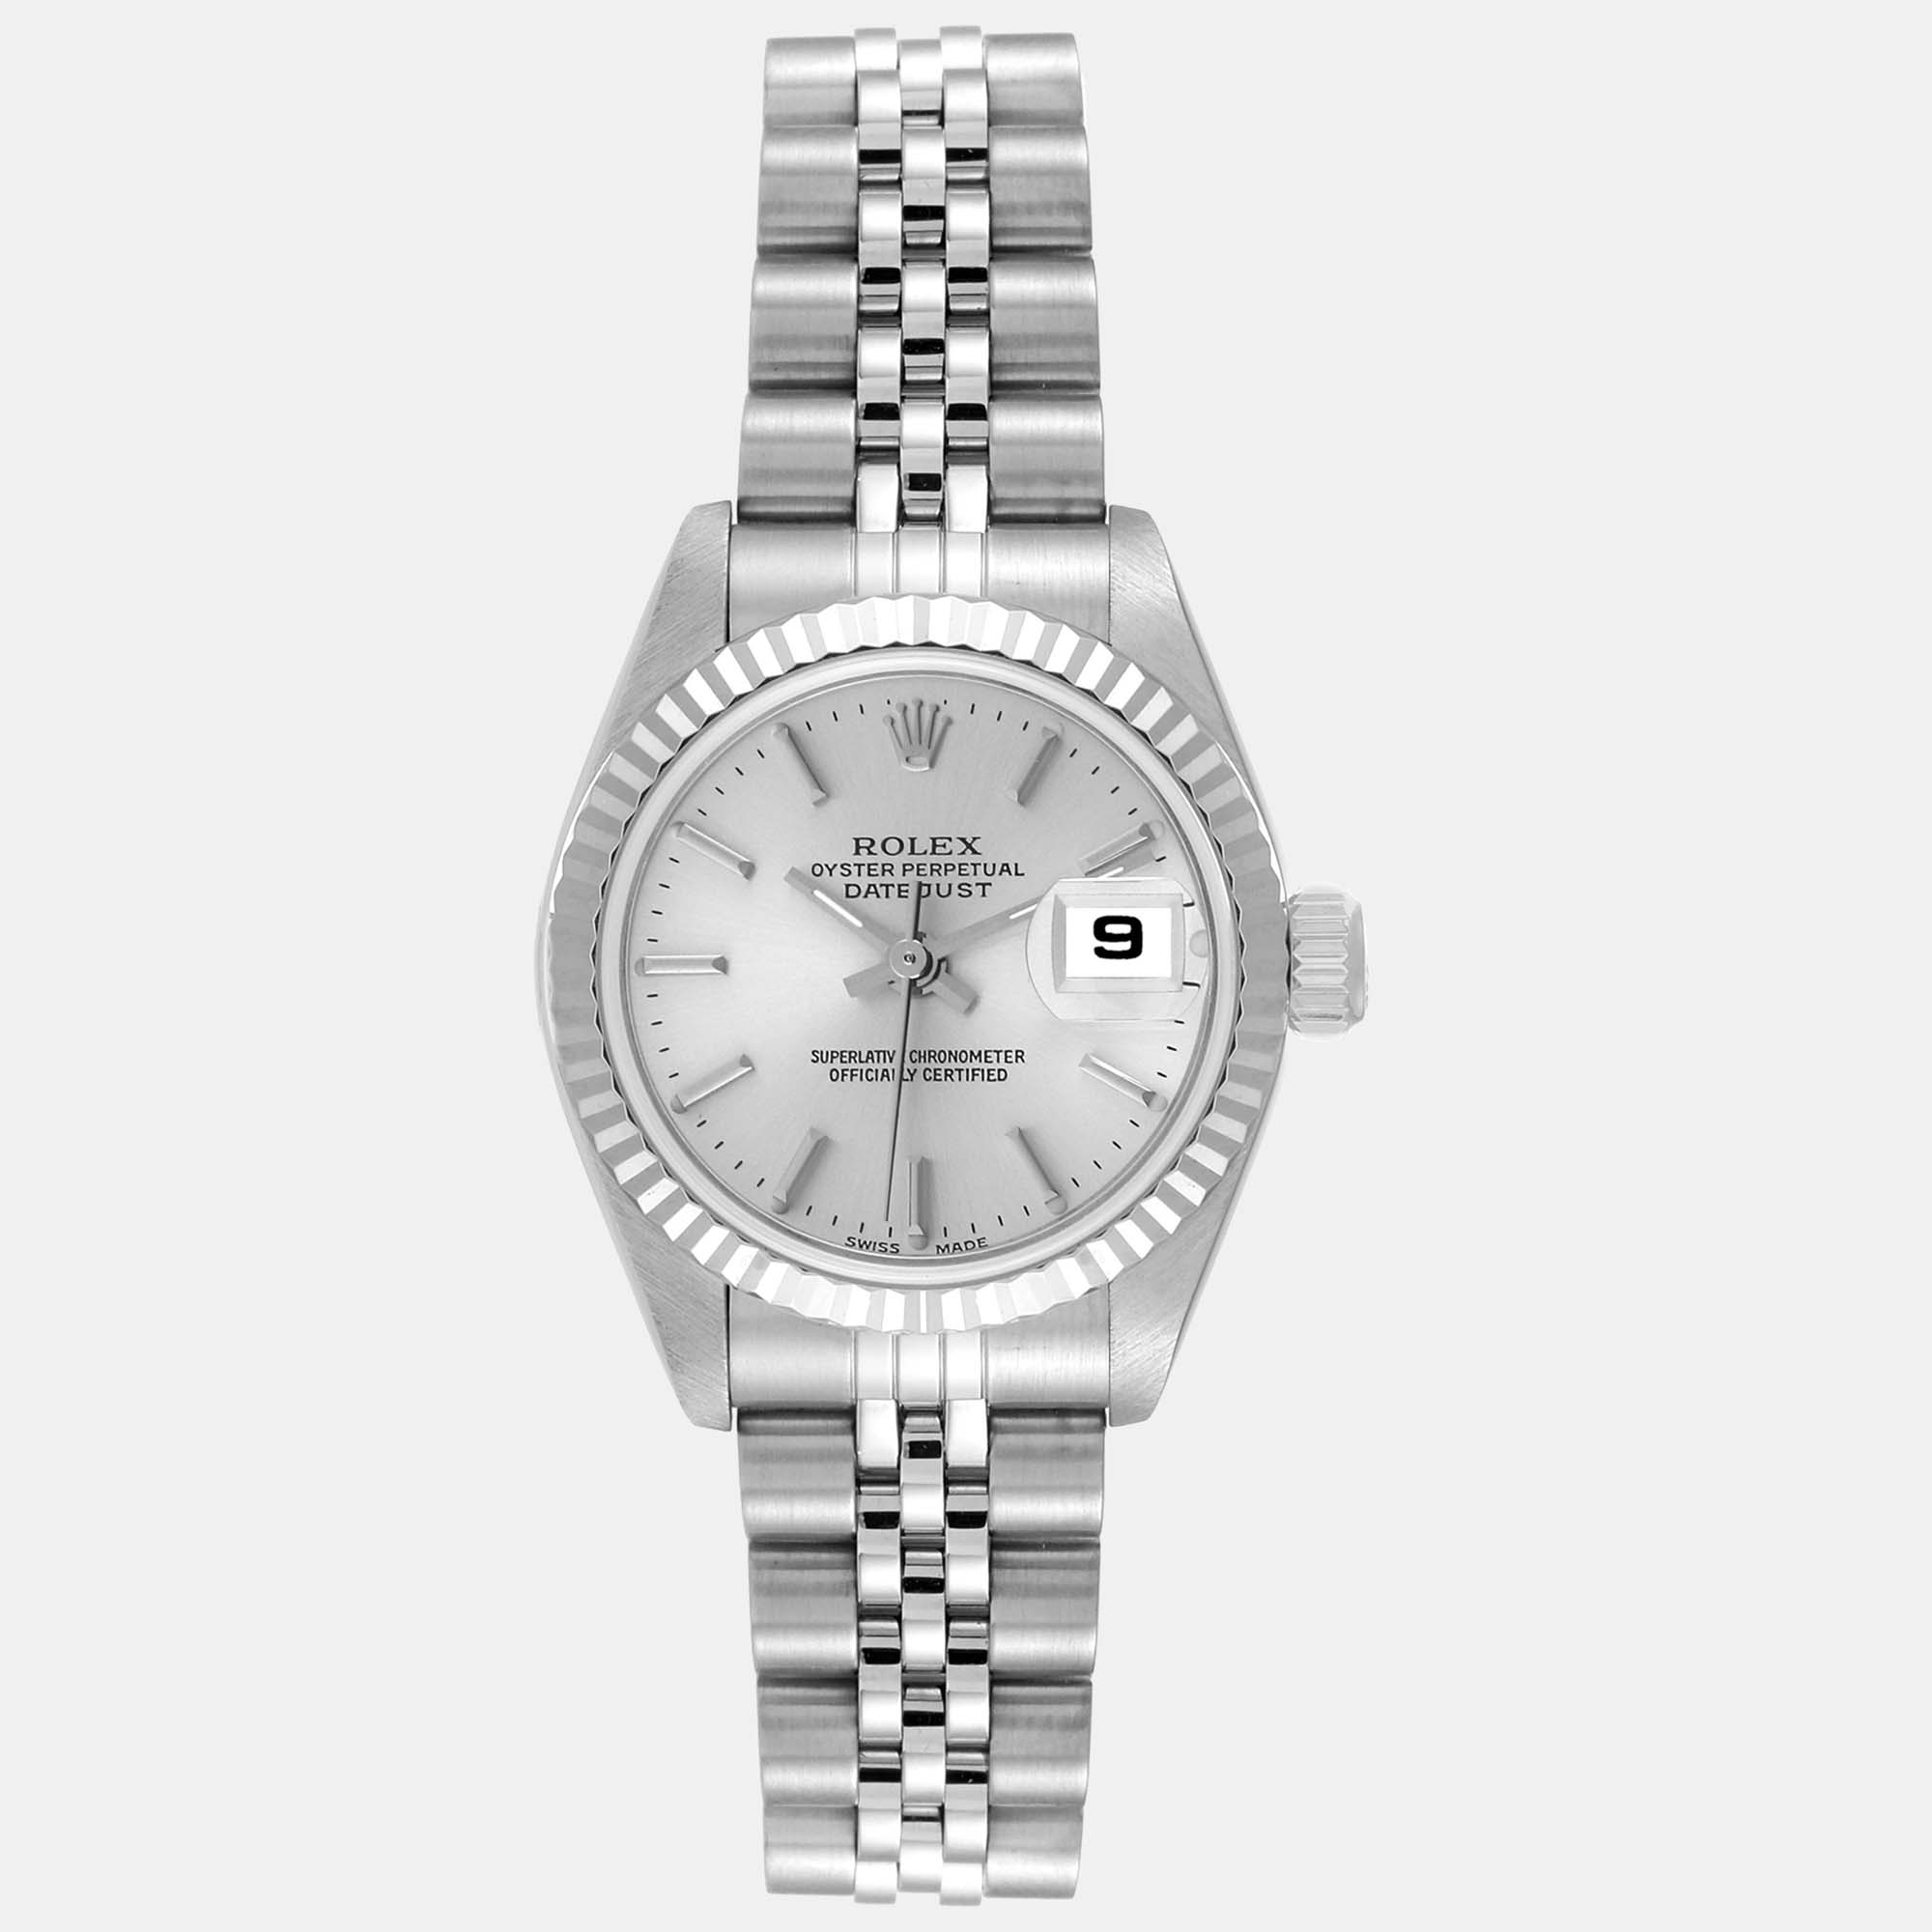 Rolex Datejust 26 Steel White Gold Silver Dial Ladies Watch 79174